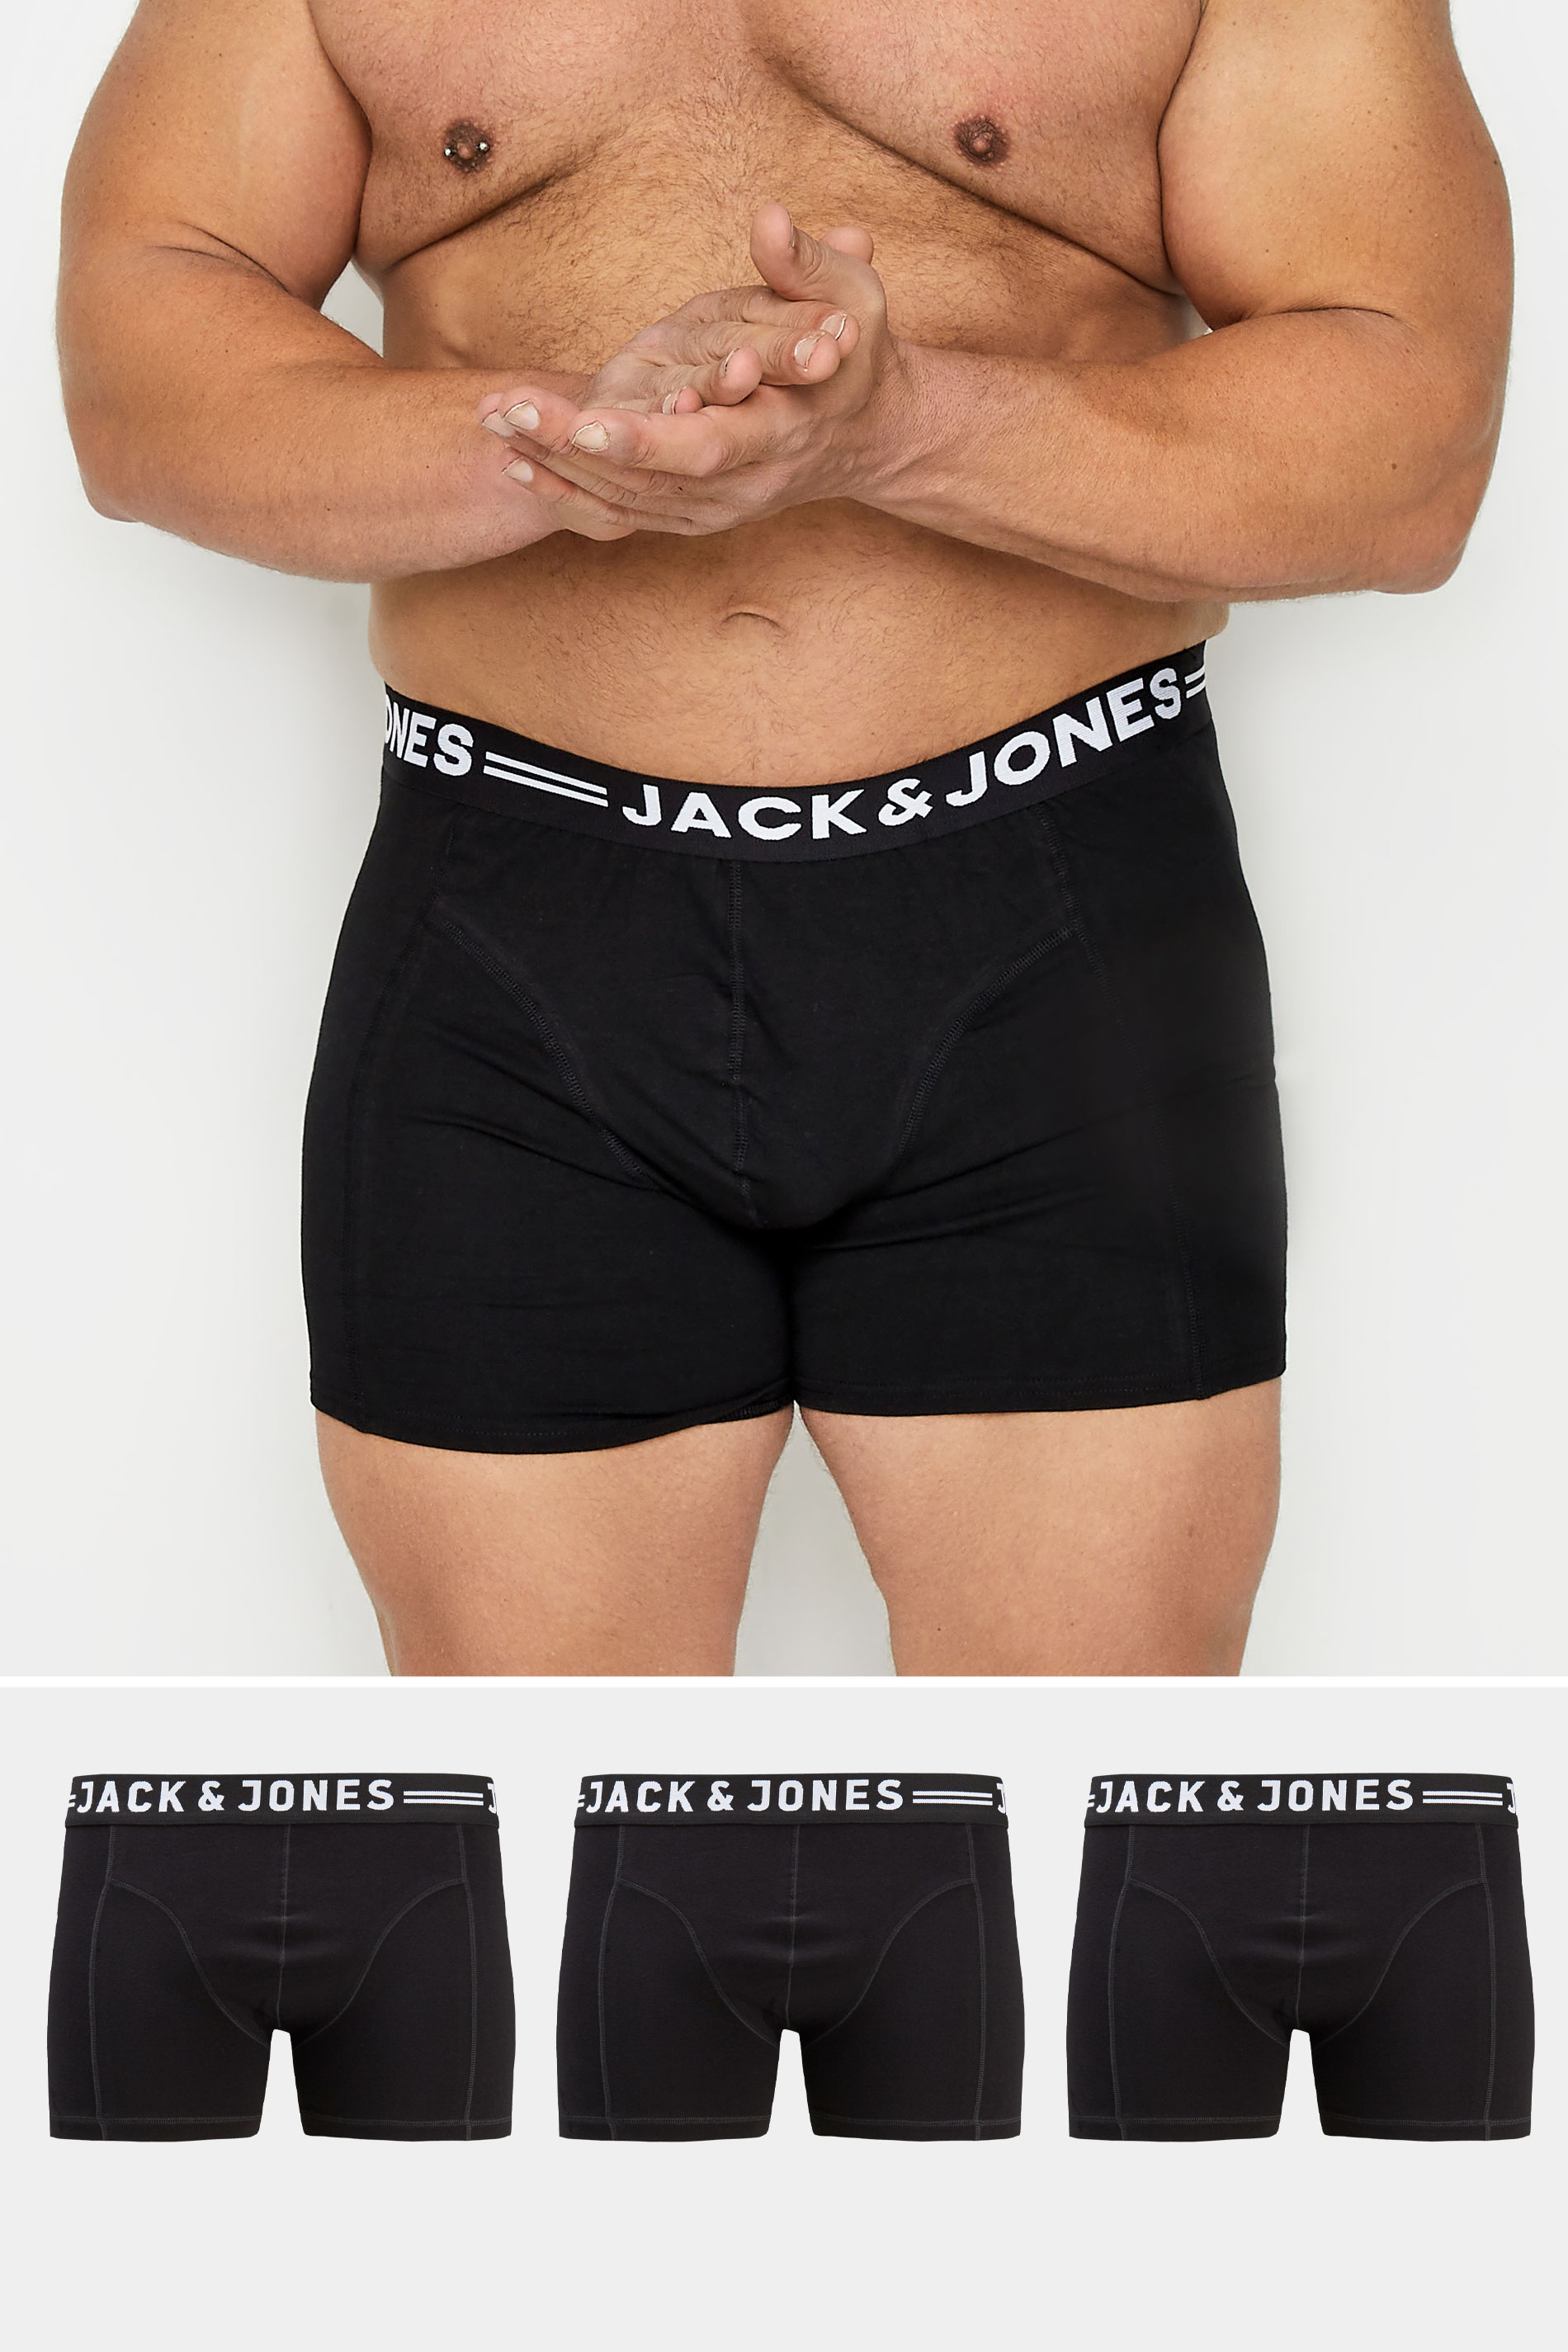 Image of Size 2Xl Mens Jack & Jones Black 3 Pack Trunks Big & Tall